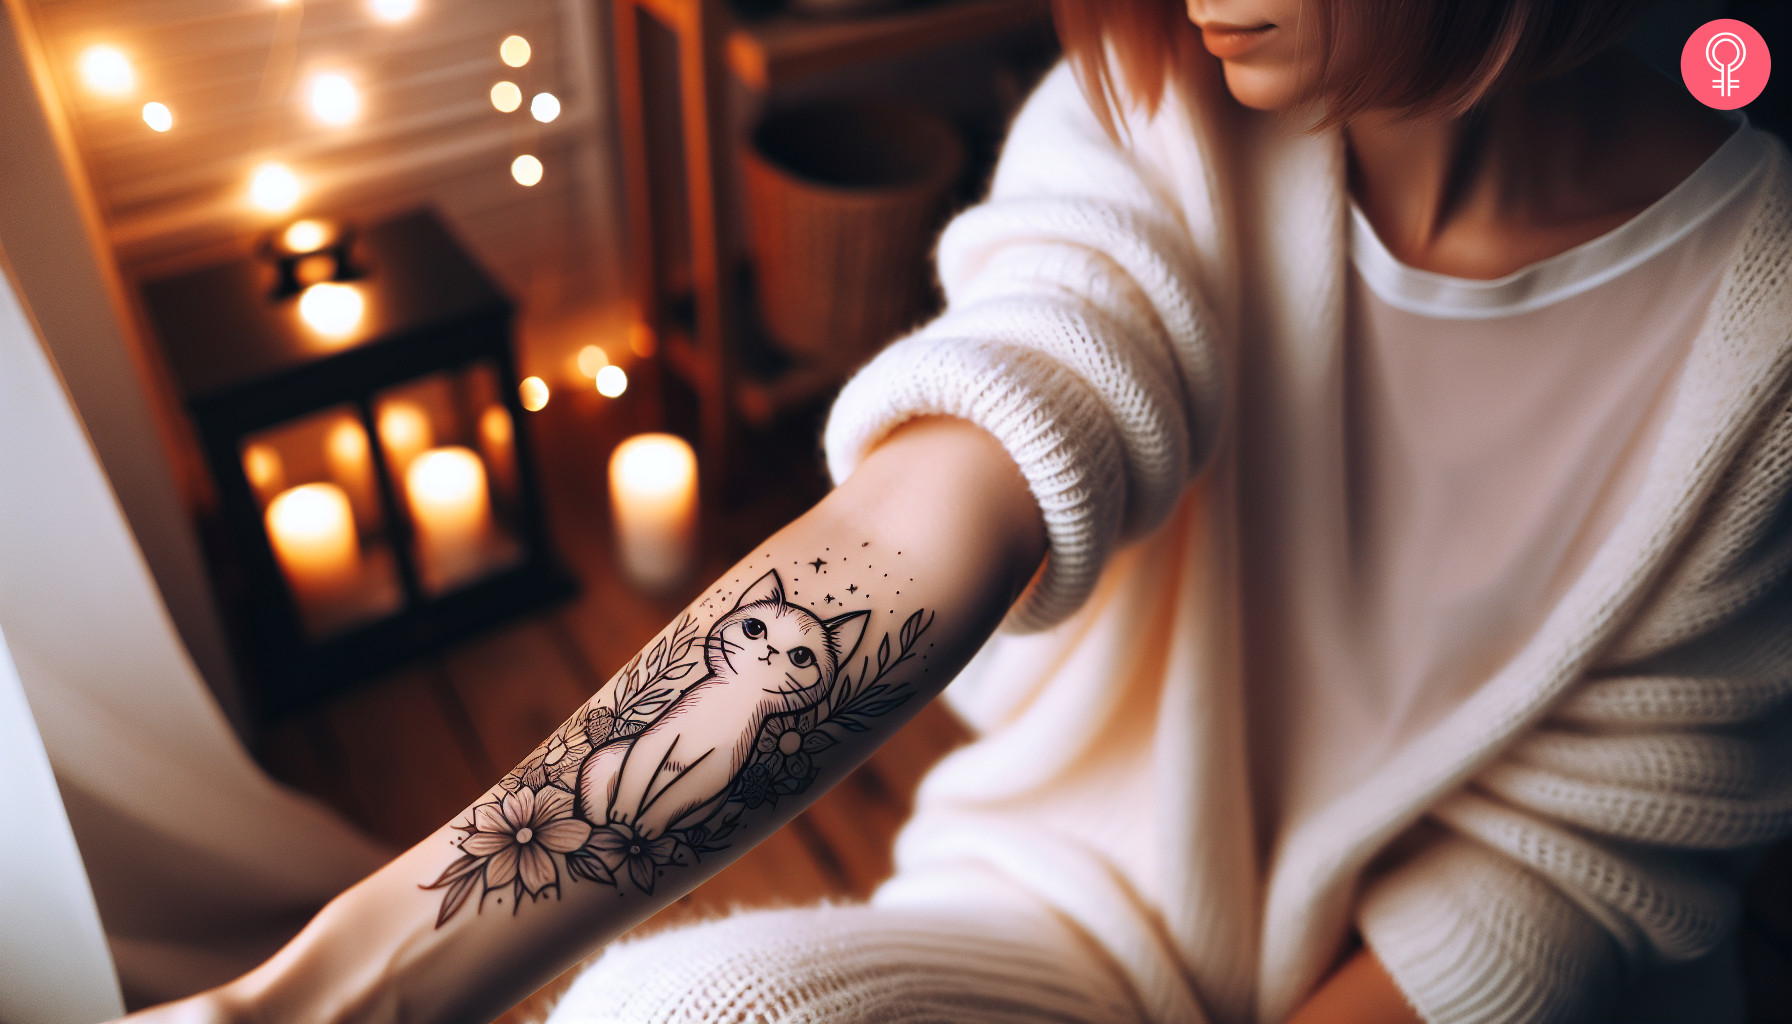 Low-key anime tattoo on a woman’s forearm